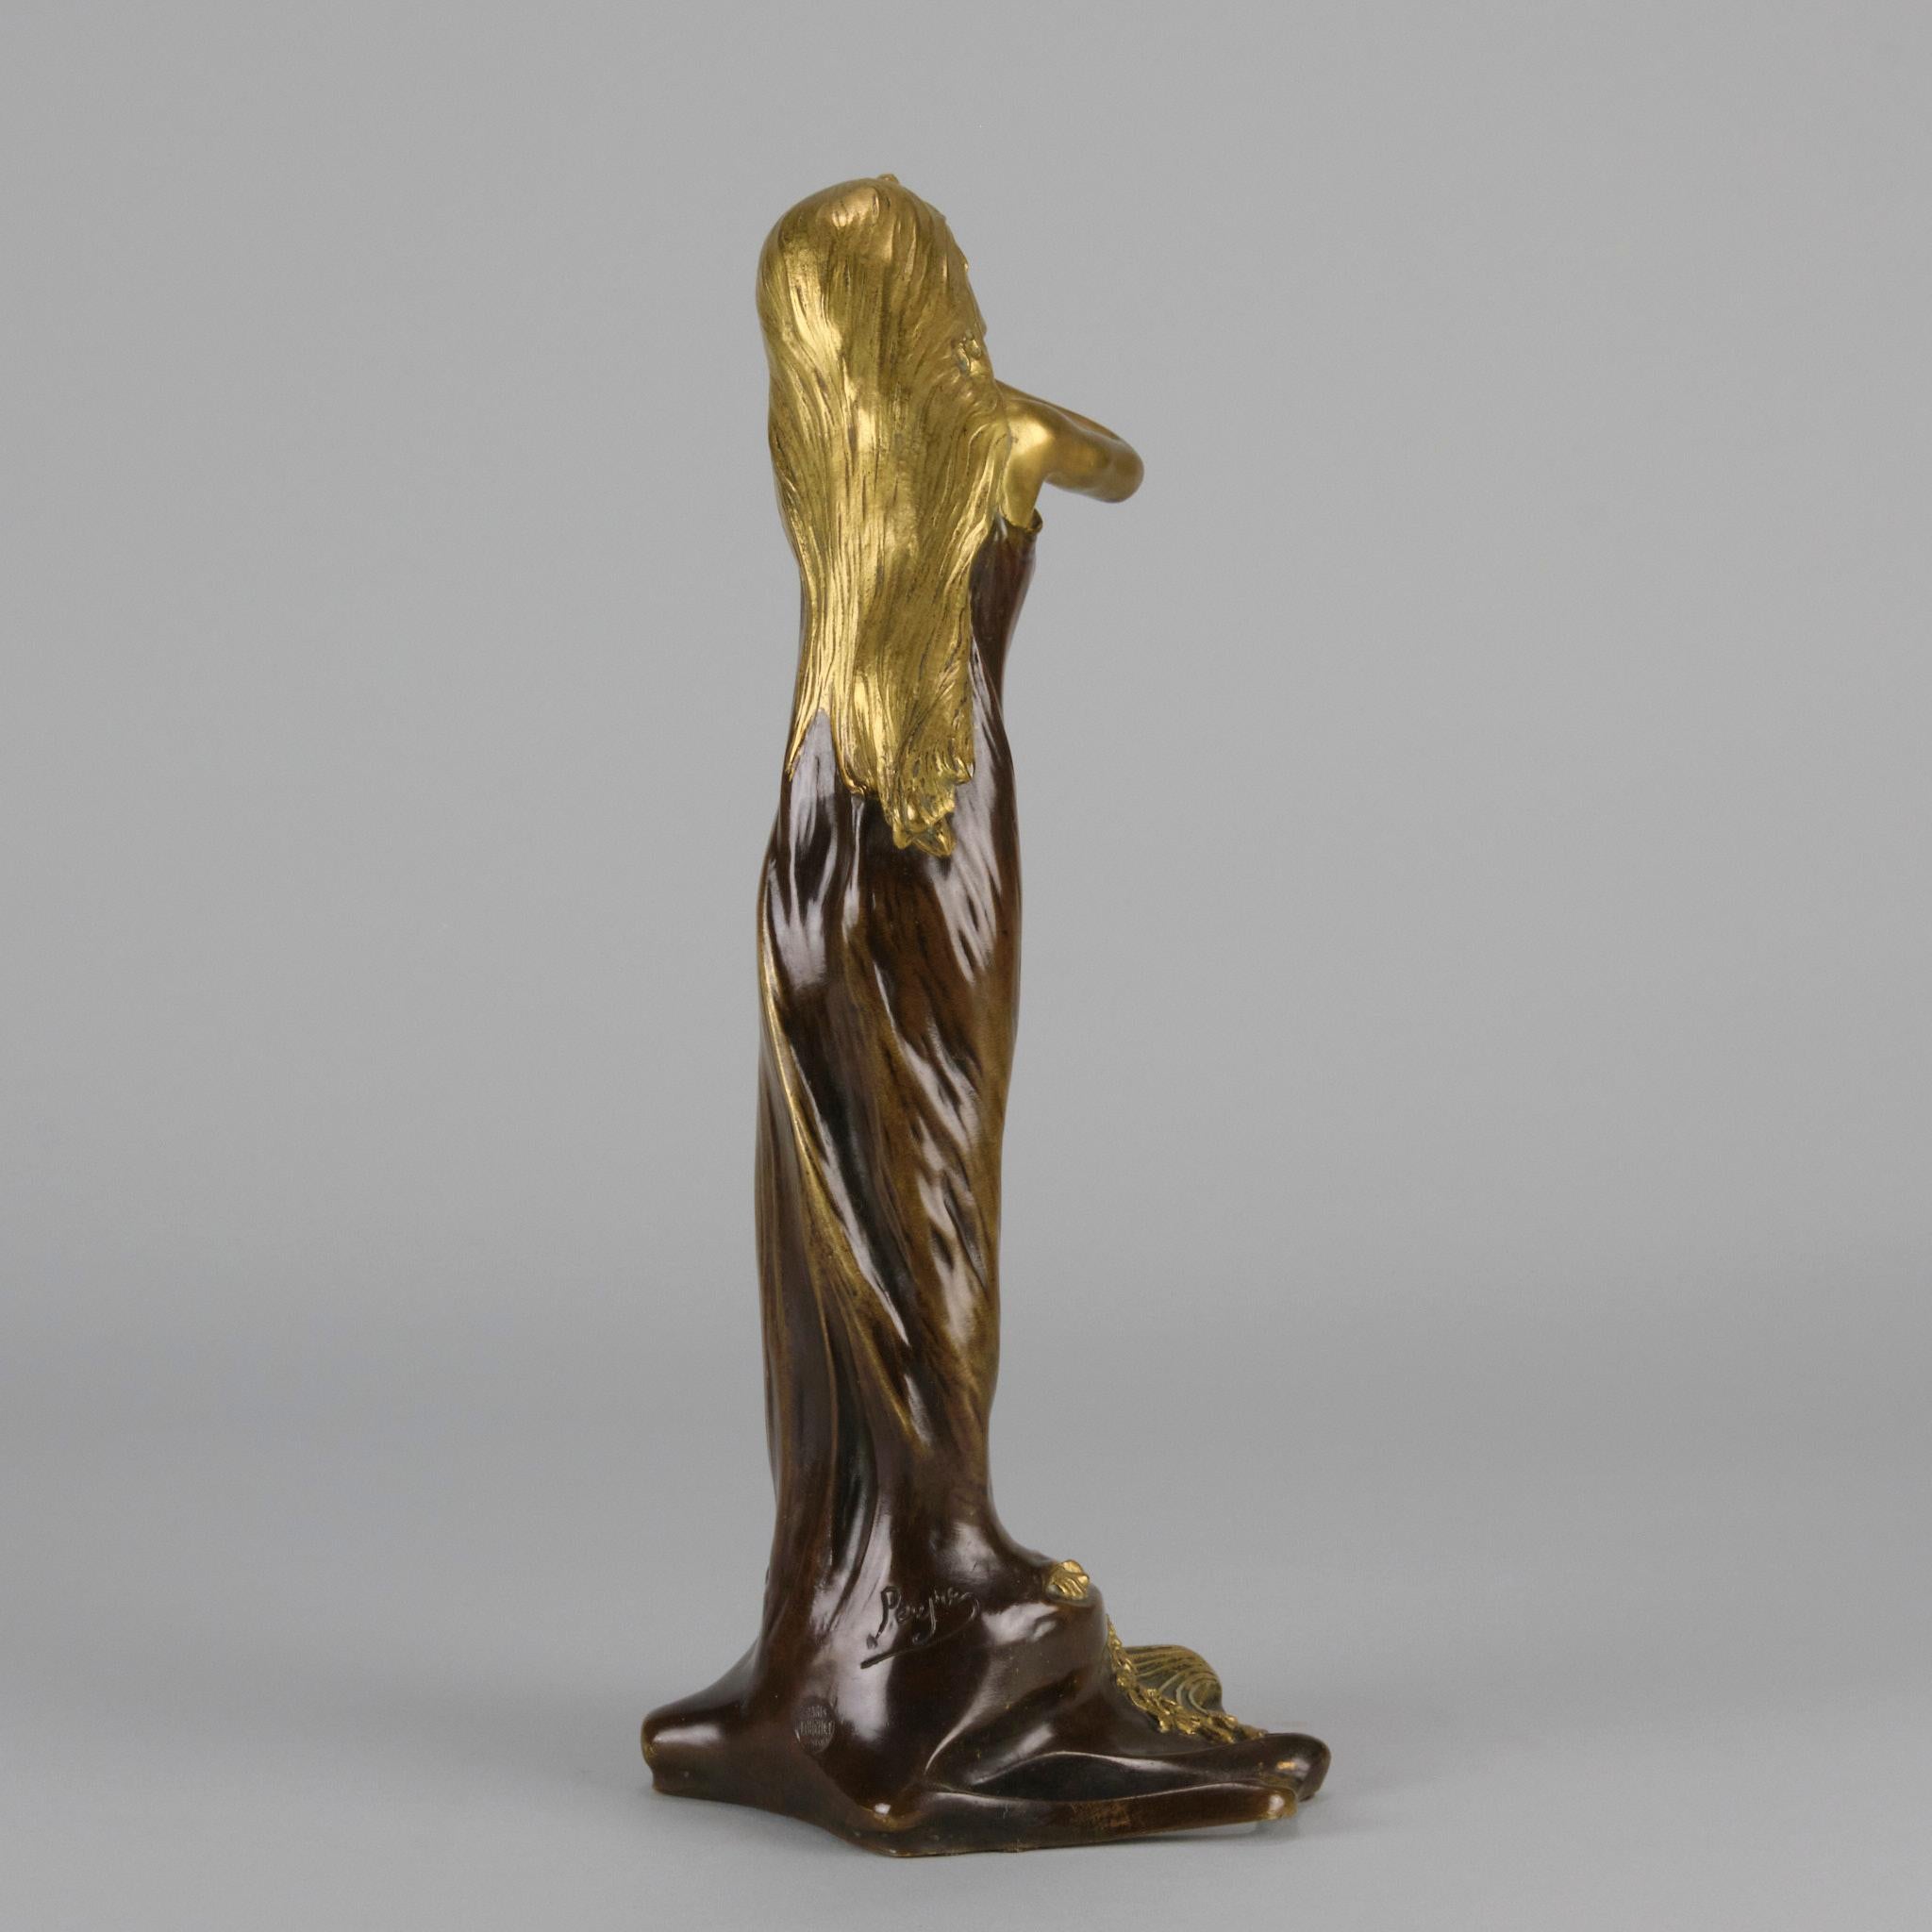 Cast Early 20th Century Bronze Entitled “Jeune Femme” by C Peyre